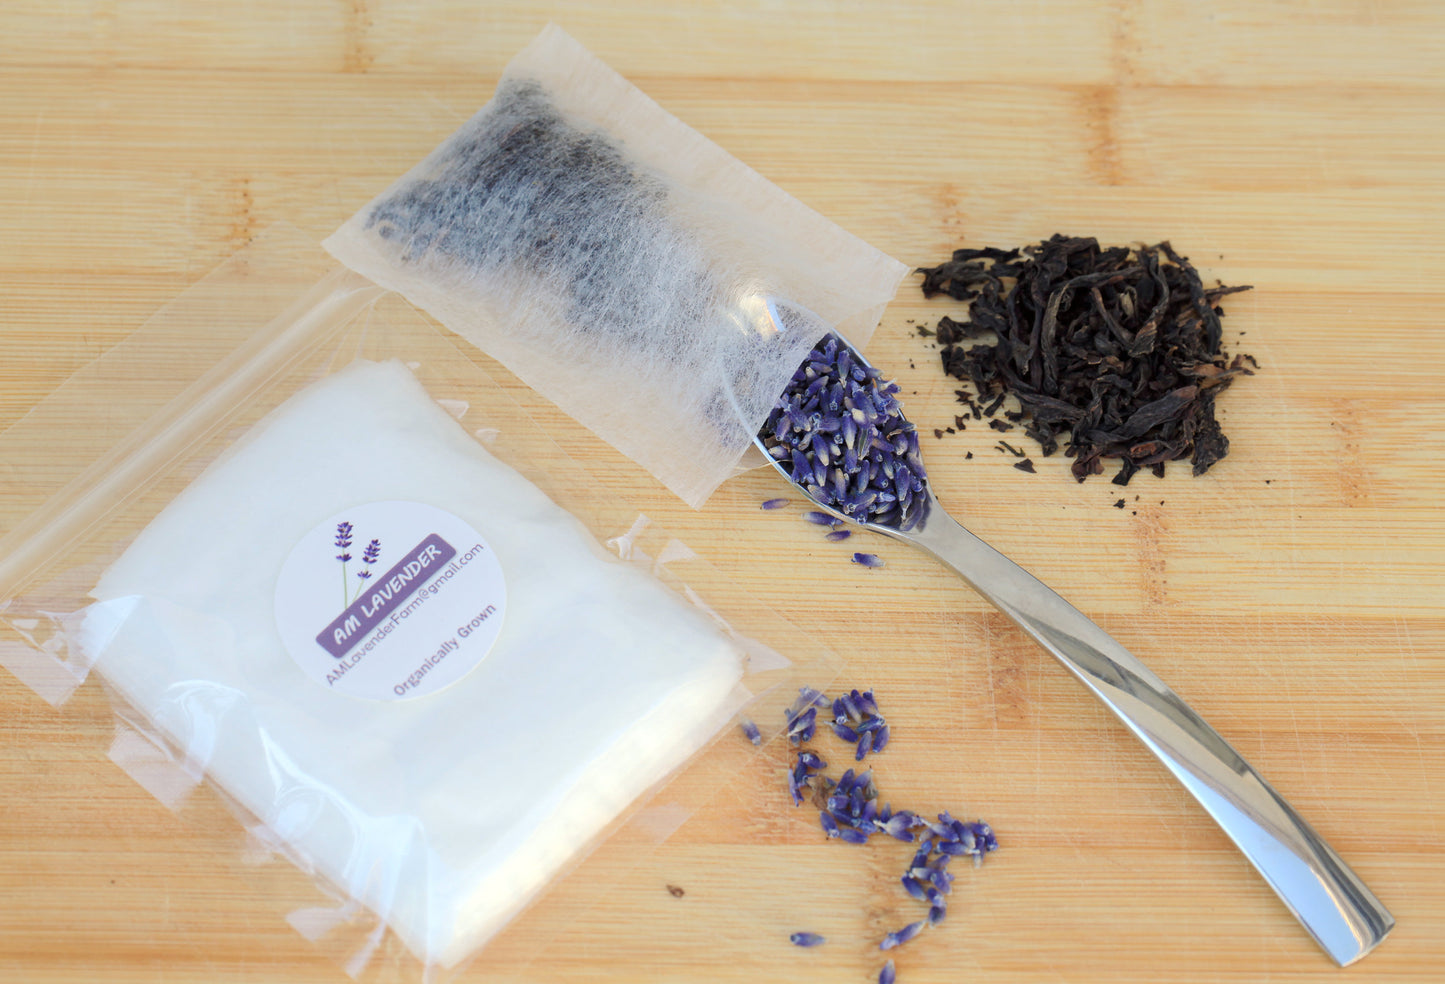 Lavender Extract, Lavender Tincture | AM Lavender, COCKTAIL BITTERS